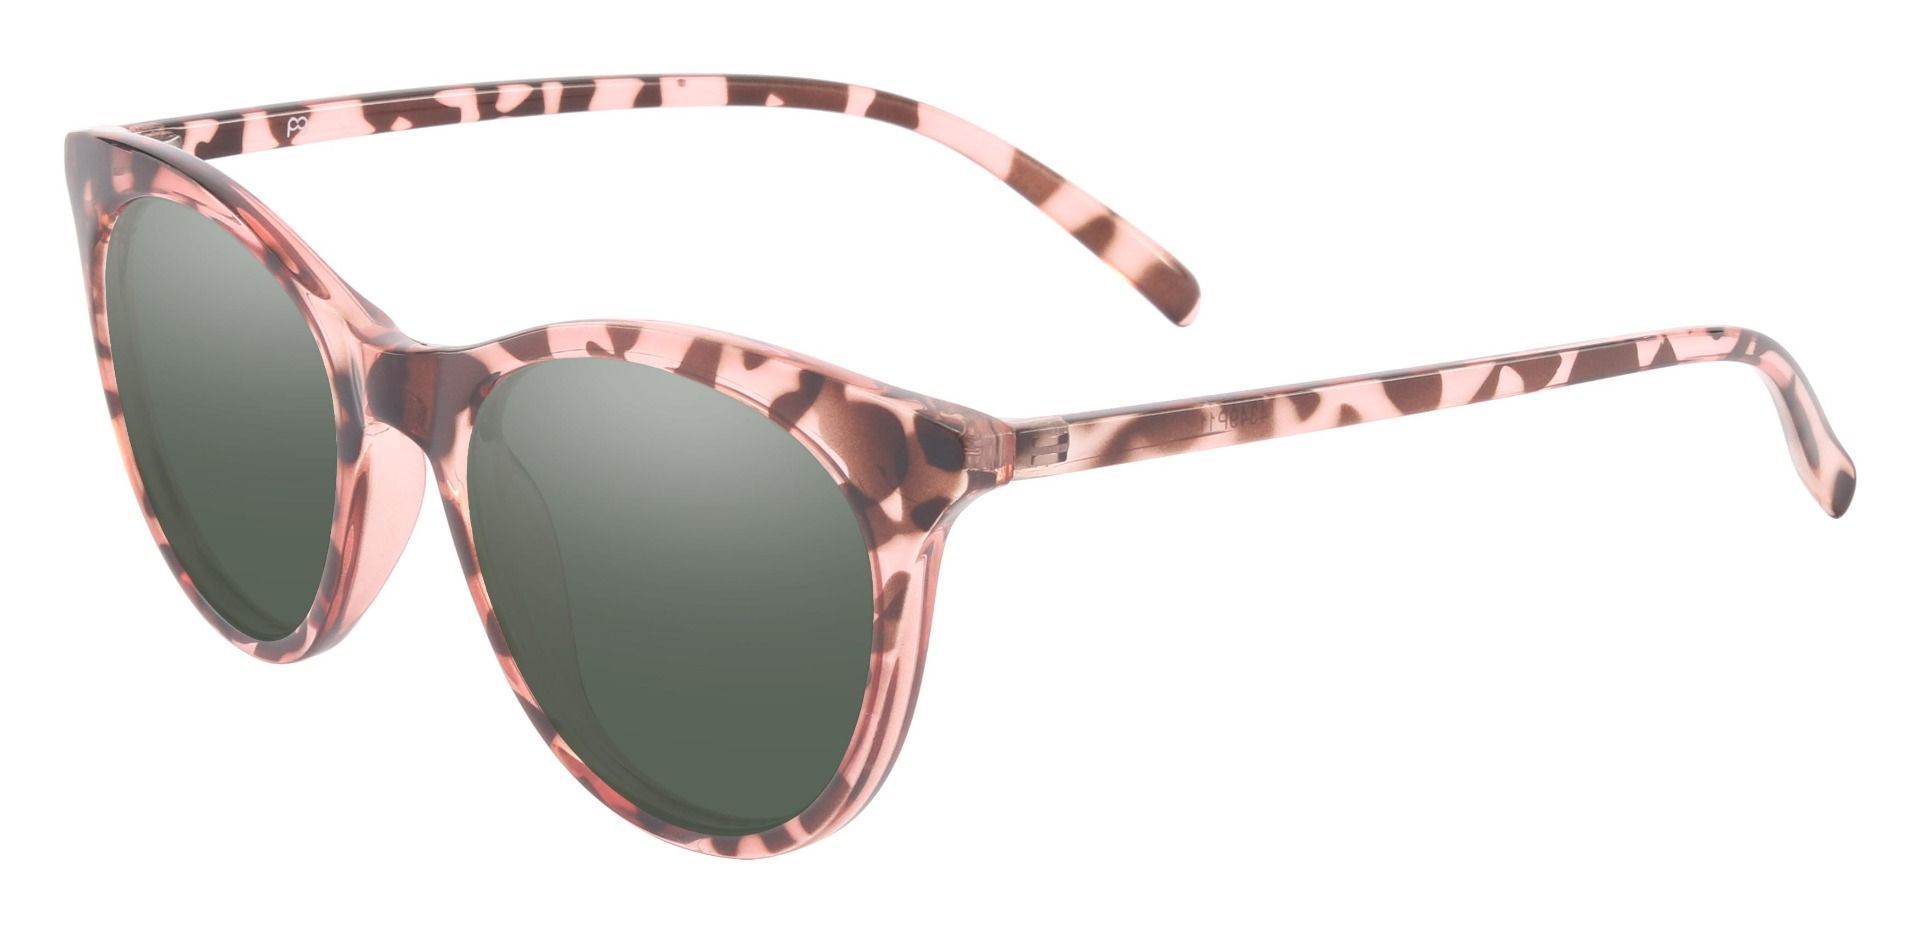 Valencia Cat Eye Prescription Sunglasses - Pink Frame With Green Lenses